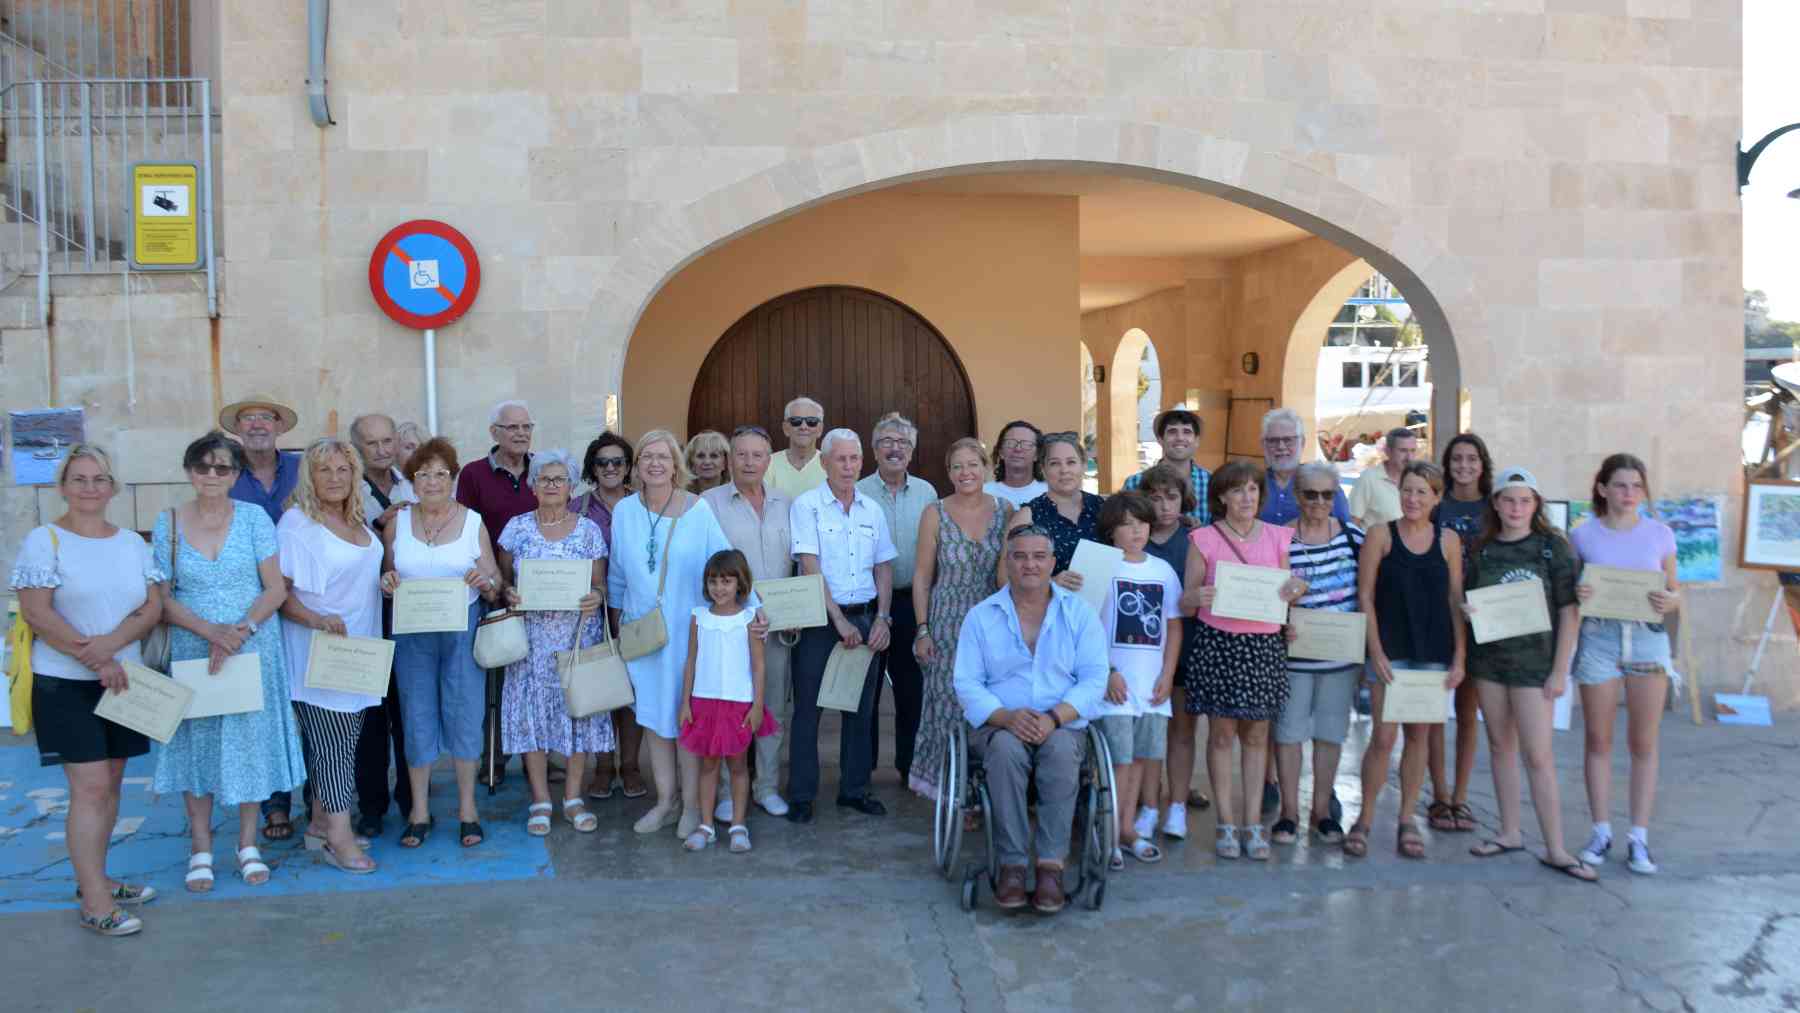 XXII Encuentro de Pintores de Santanyí celebrado este fin de semana en Cala Figuera. AYTO. SANTANYÍ